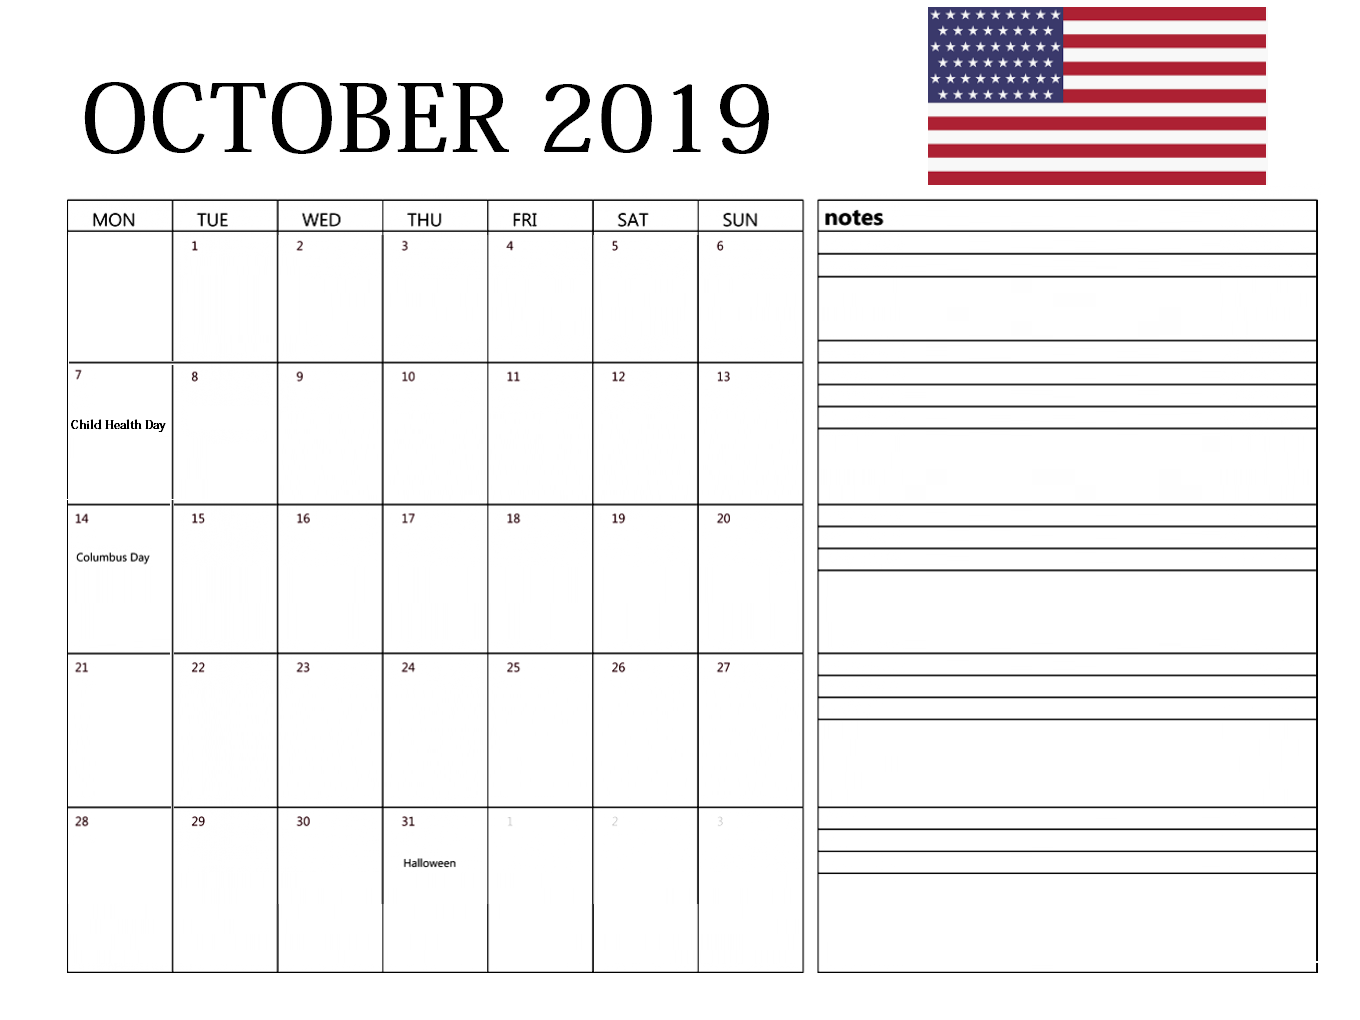 USA October 2019 Holidays Calendar